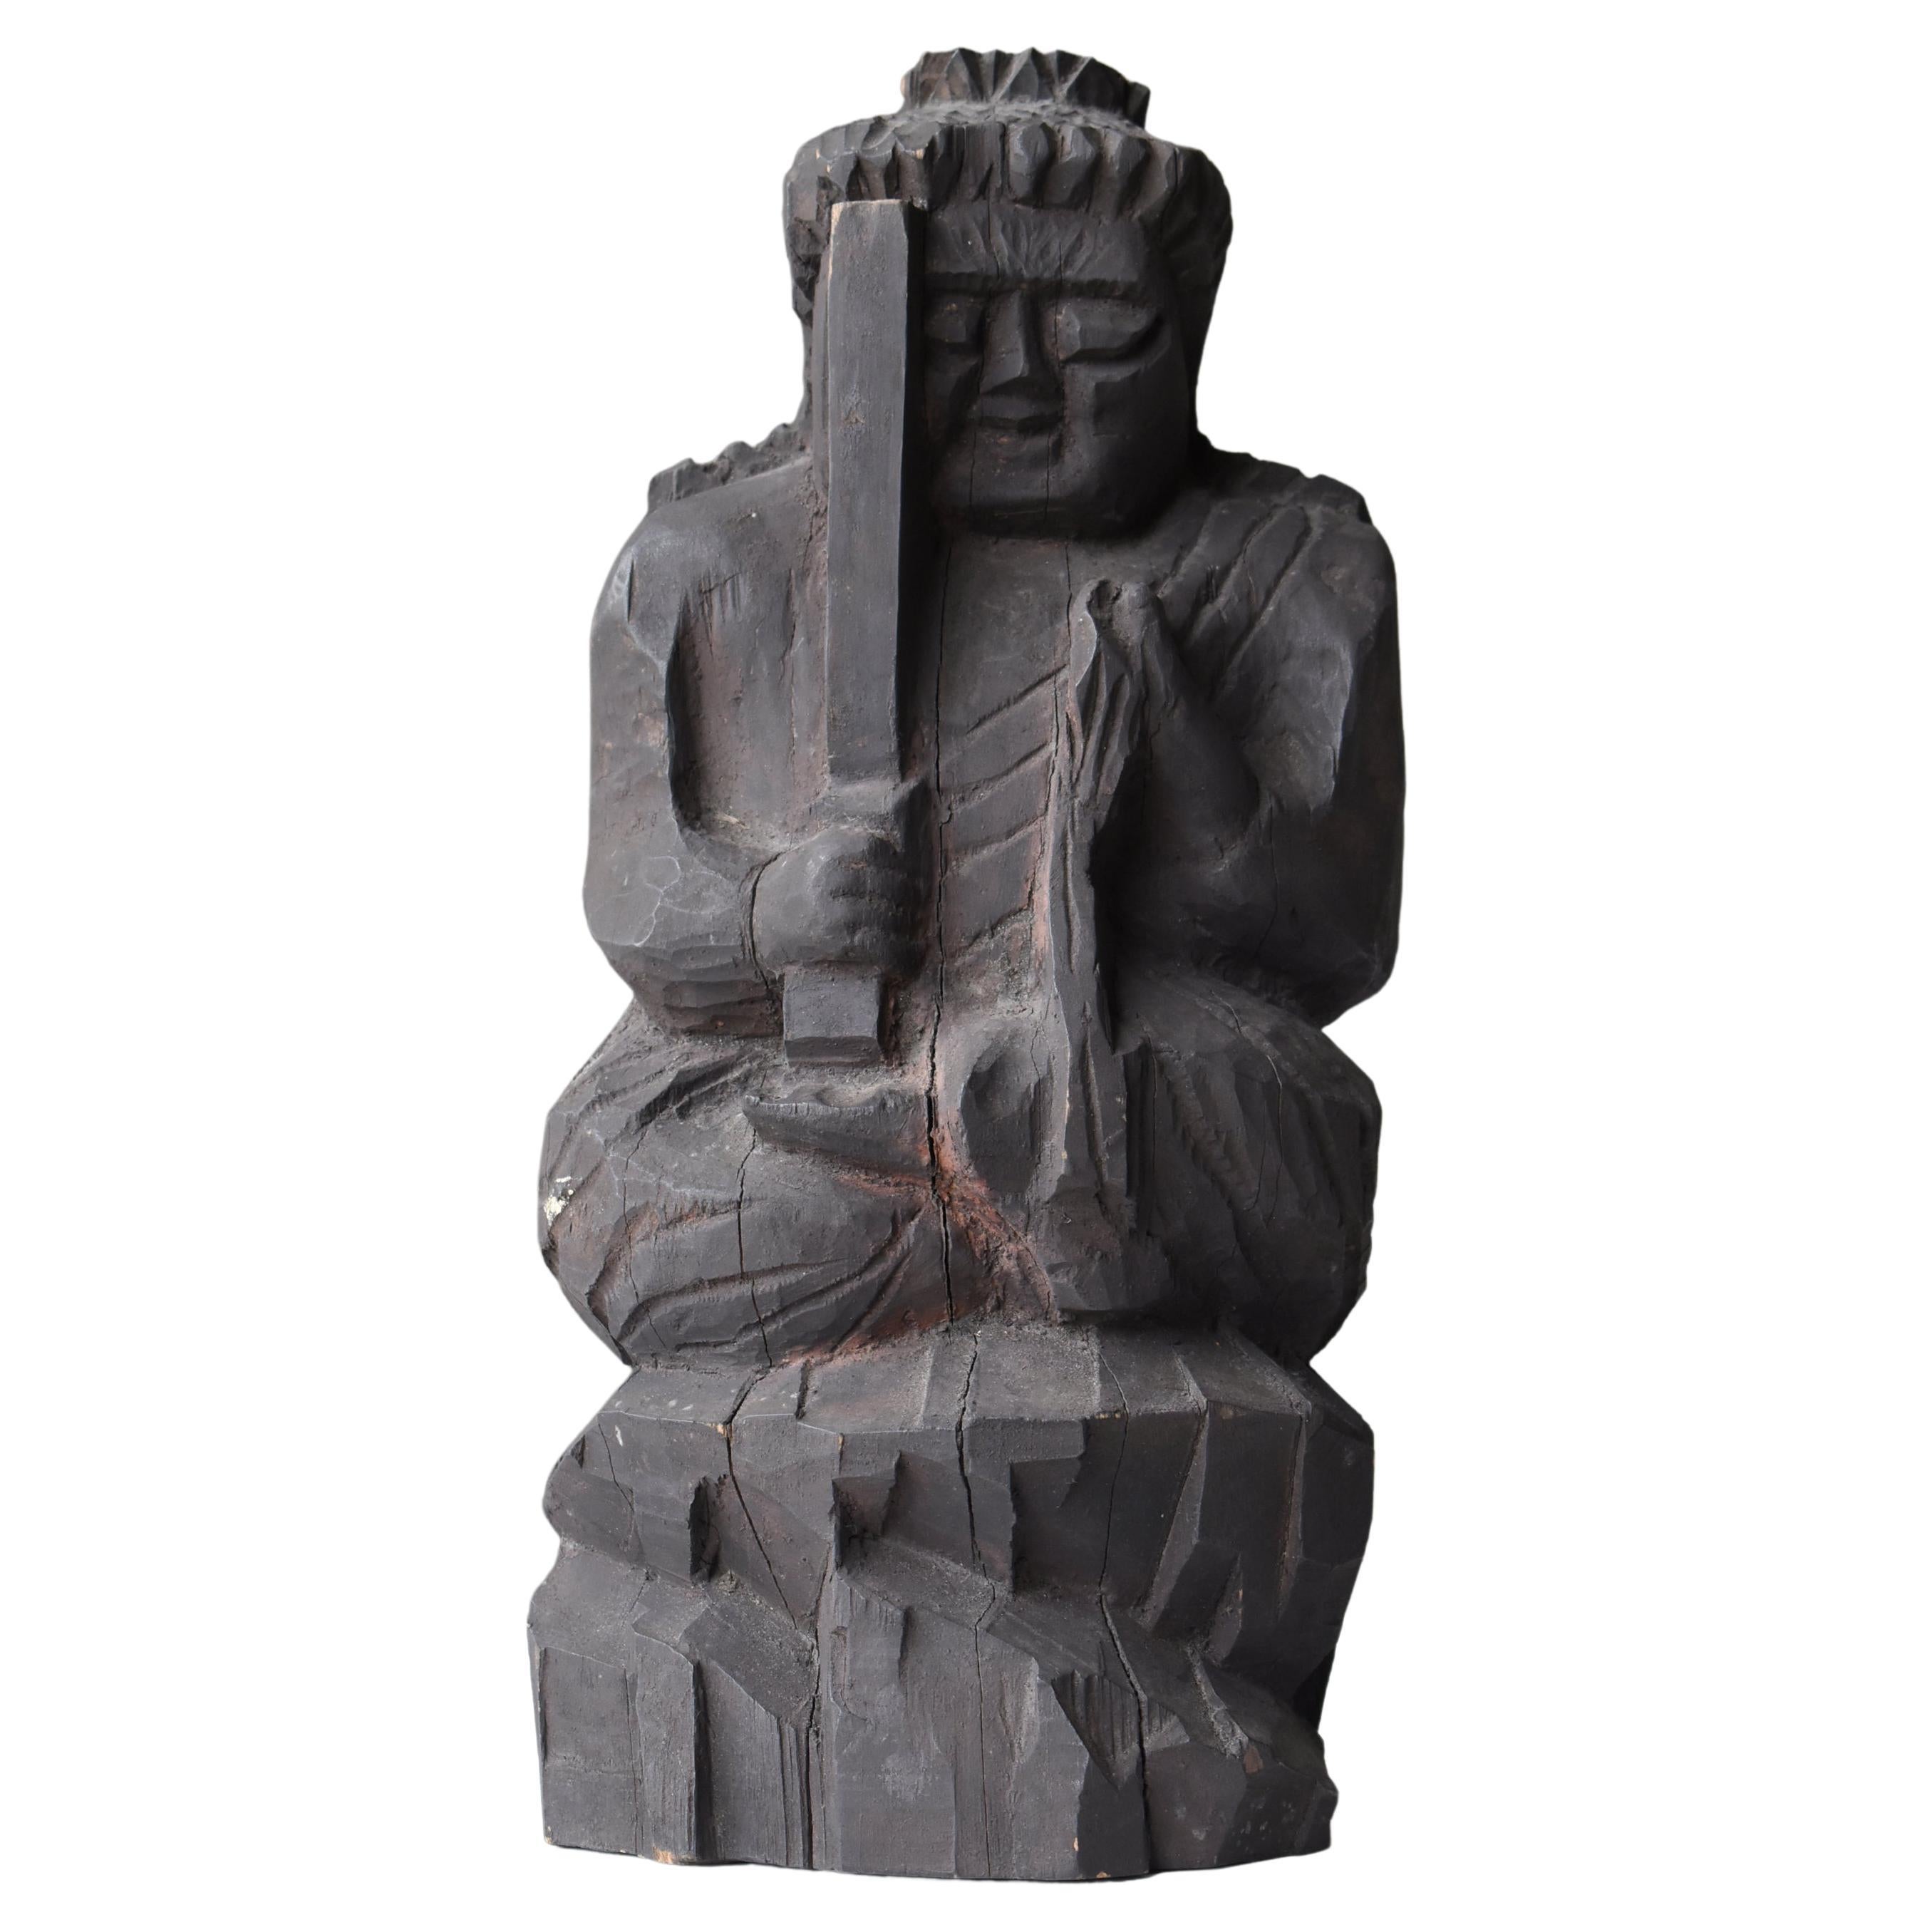 Japanese Antique Wood Carving 'Acalanatha' 1800s-1860s/Sculpture Mingei Wabisabi